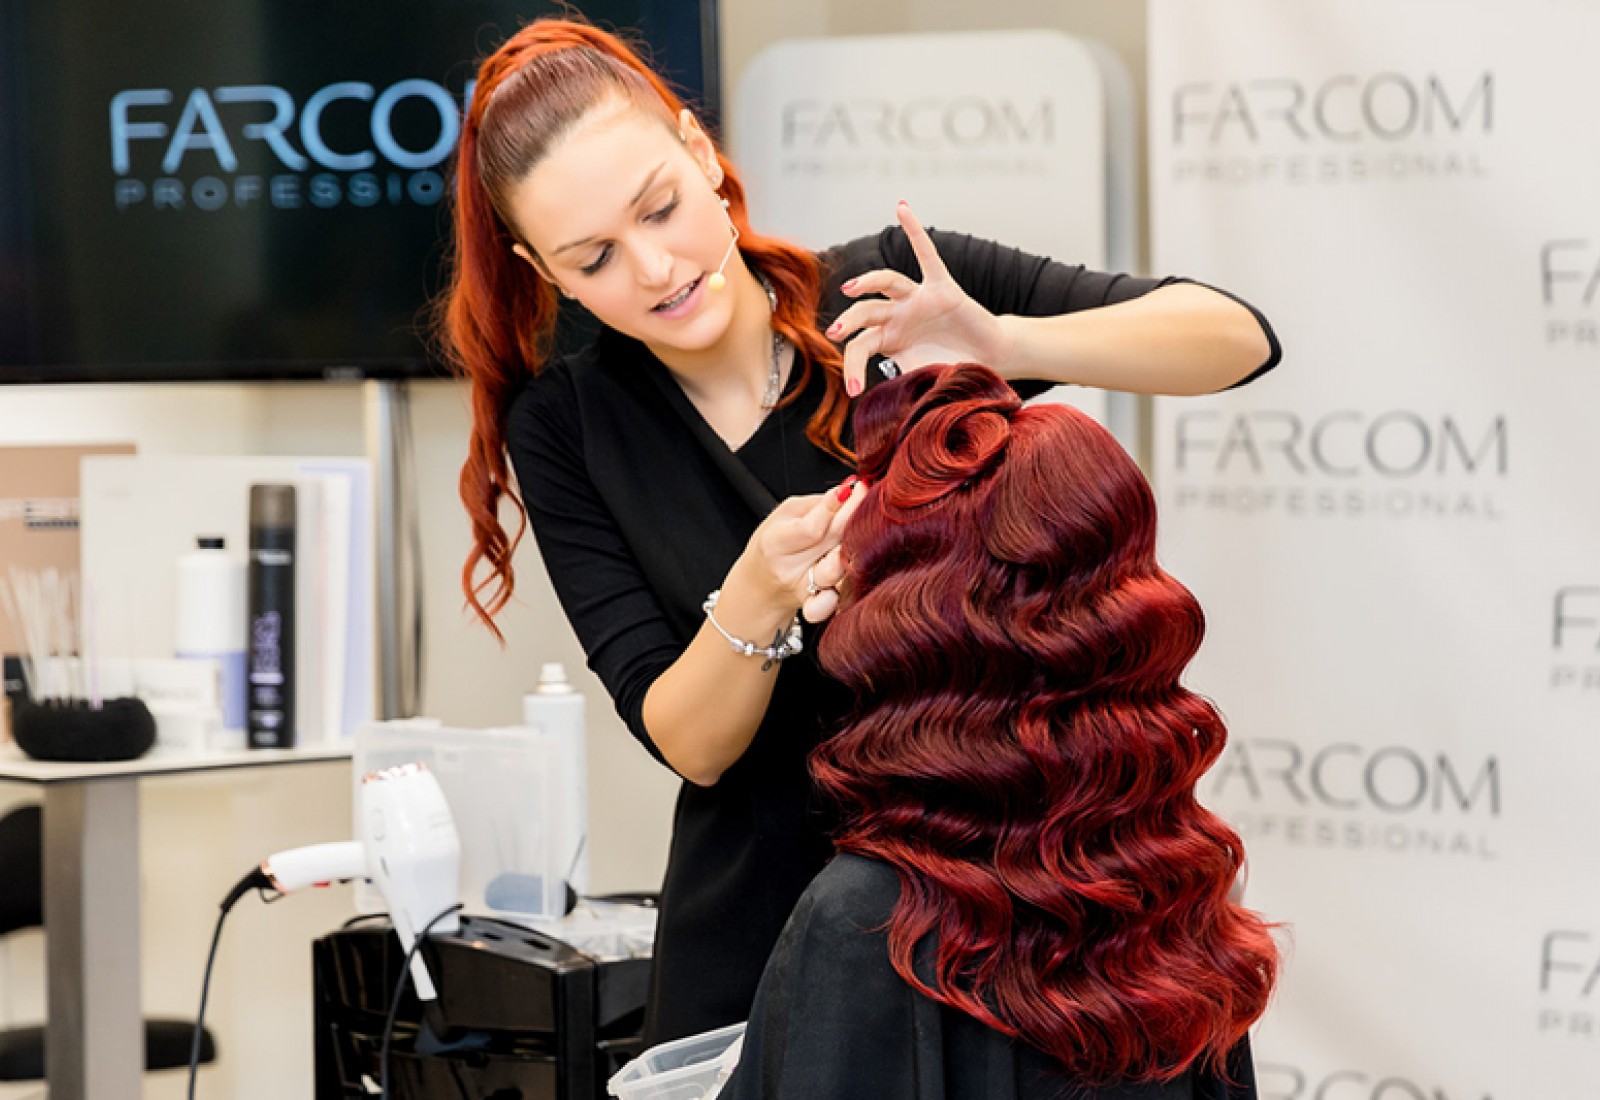 Farcom Professional – Educational Seminar Bridal & Evening Hairstyles & Workshop